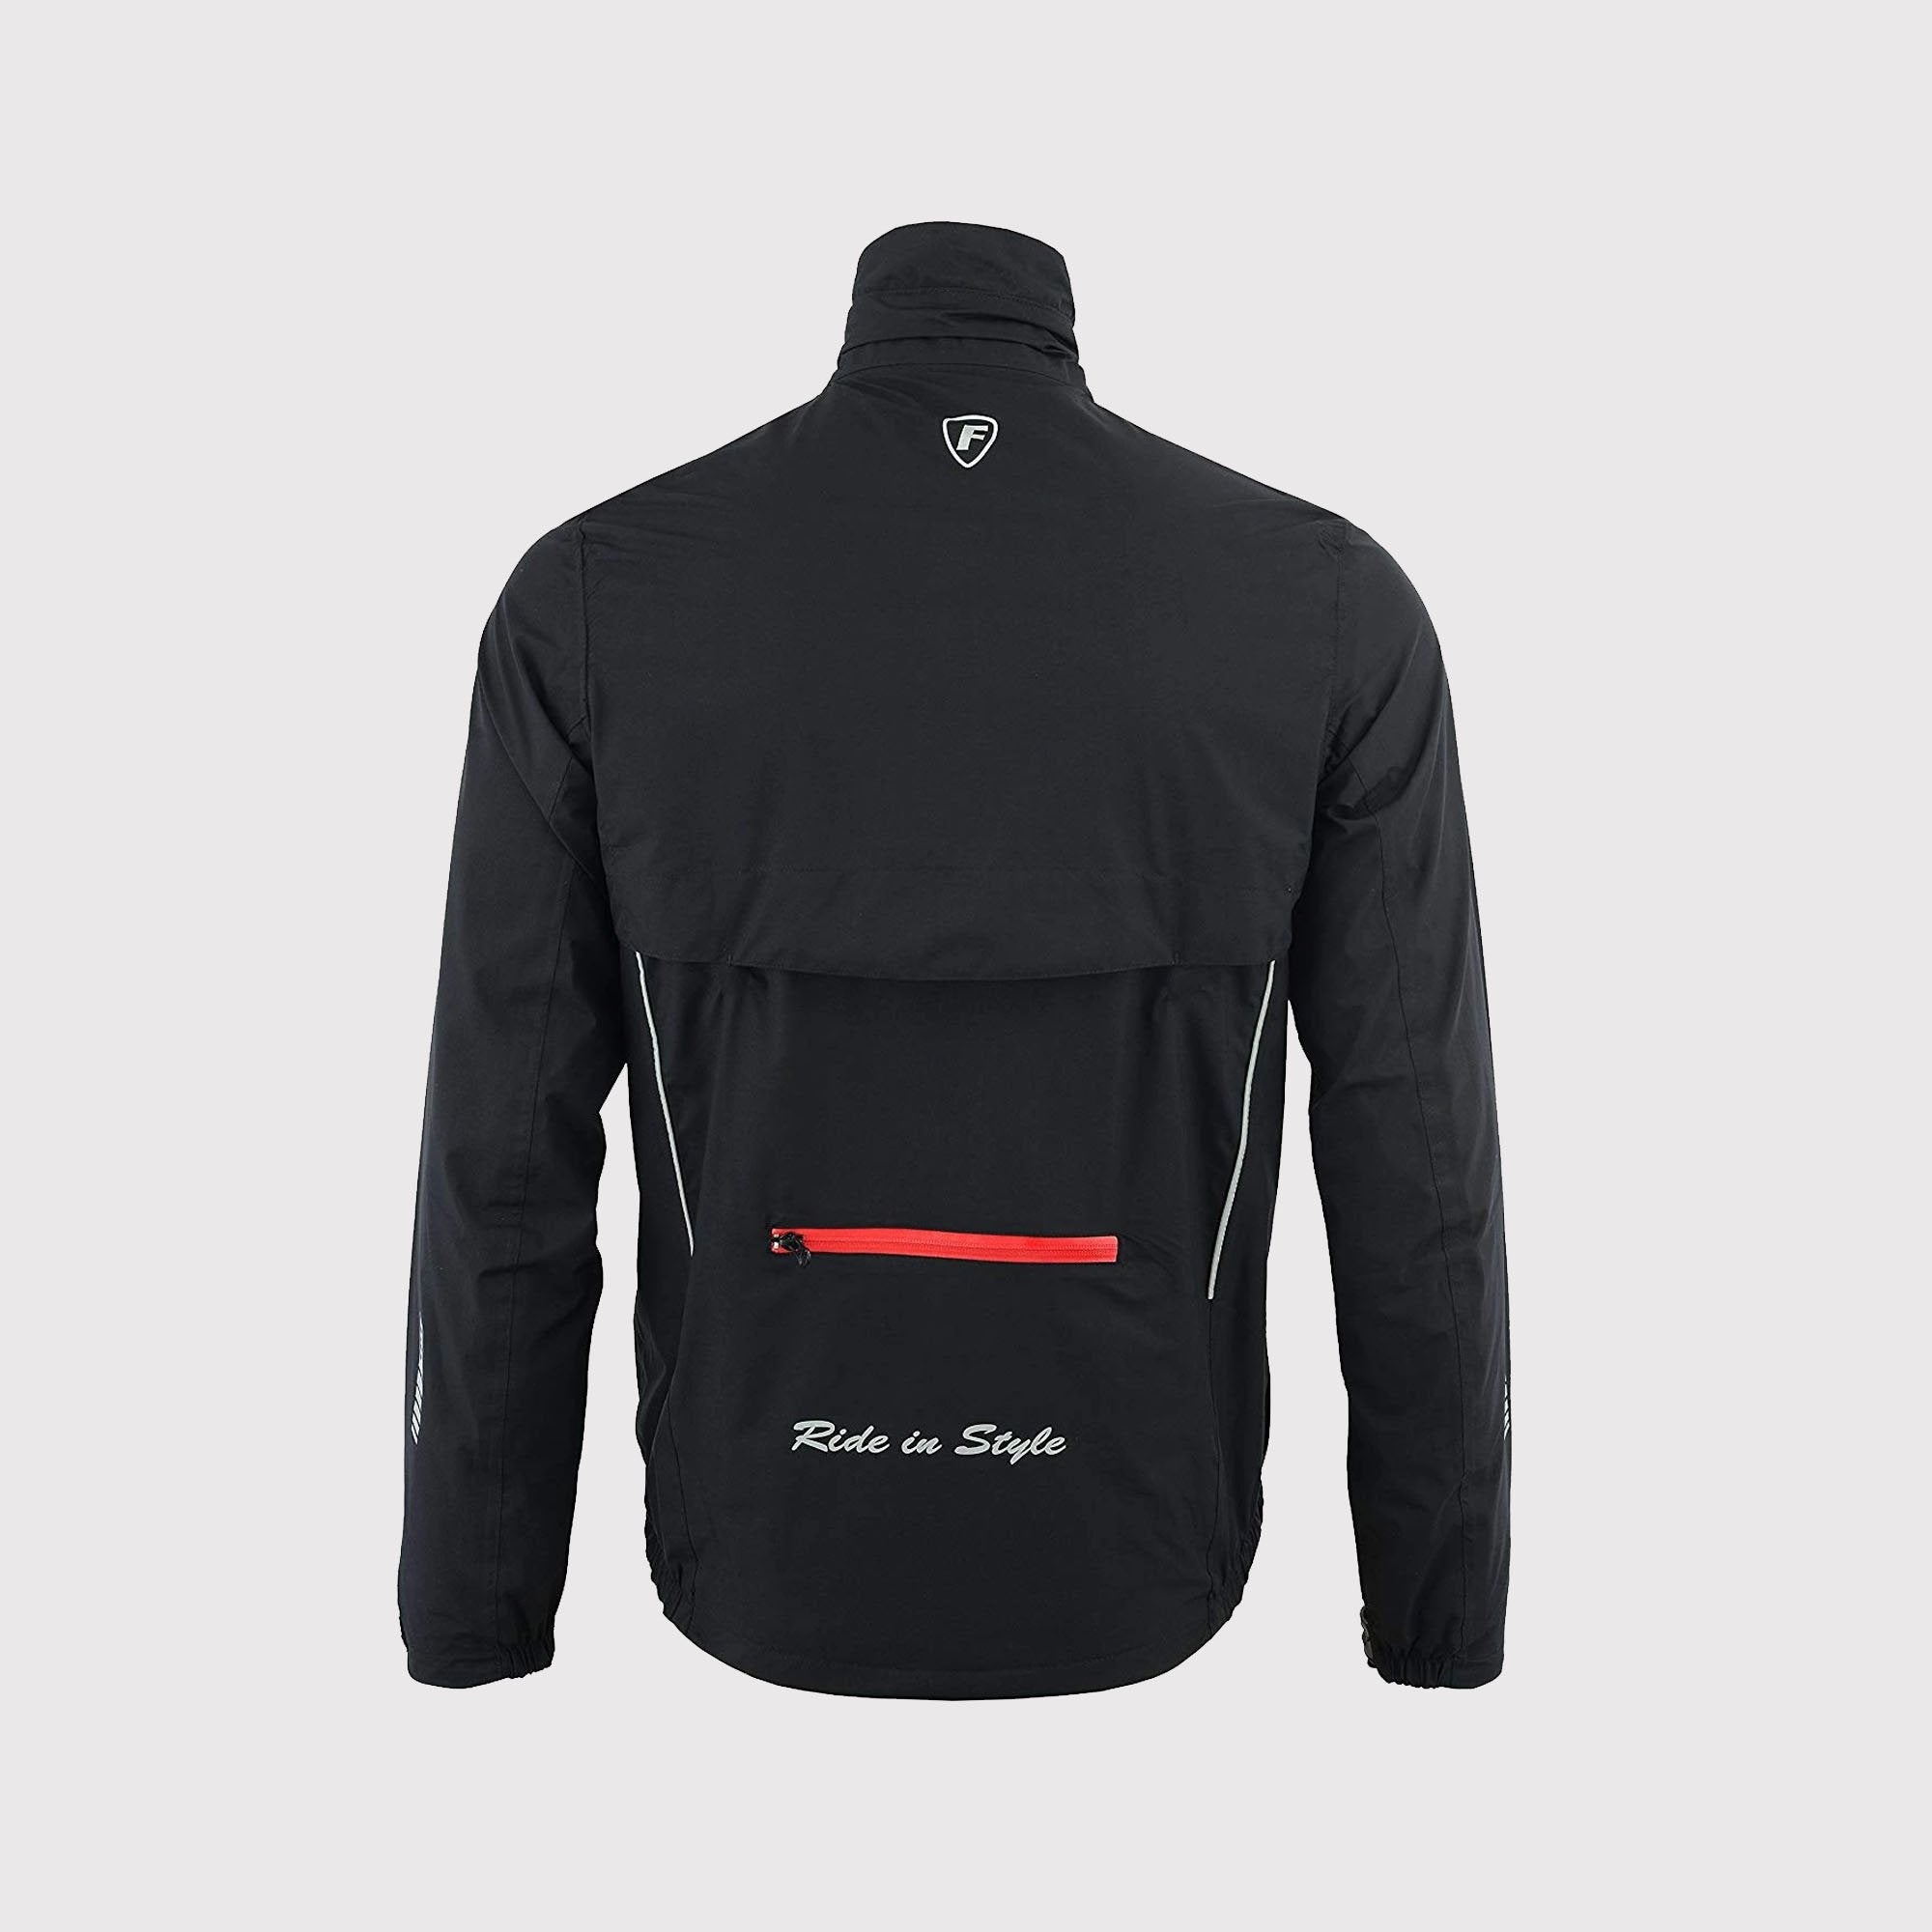 Fdx Evex Black Men's Windproof & Waterproof Thermal Cycling Jacket